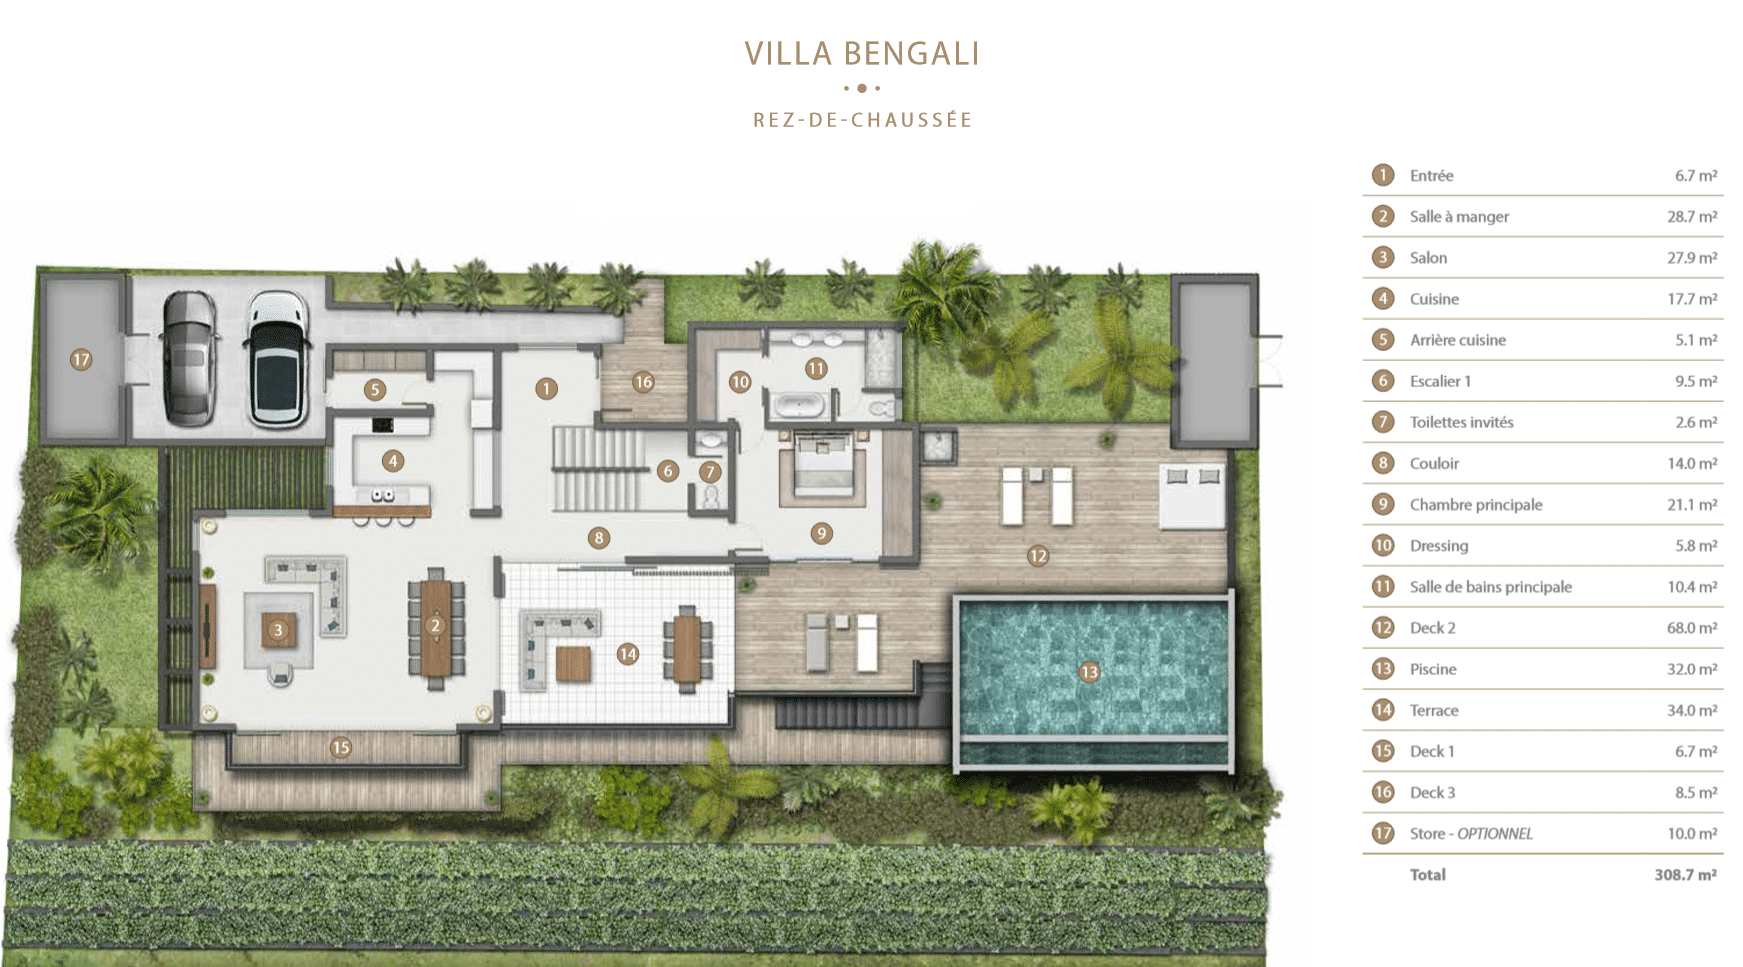 Villa Bengali Legend Hill Ile Maurice